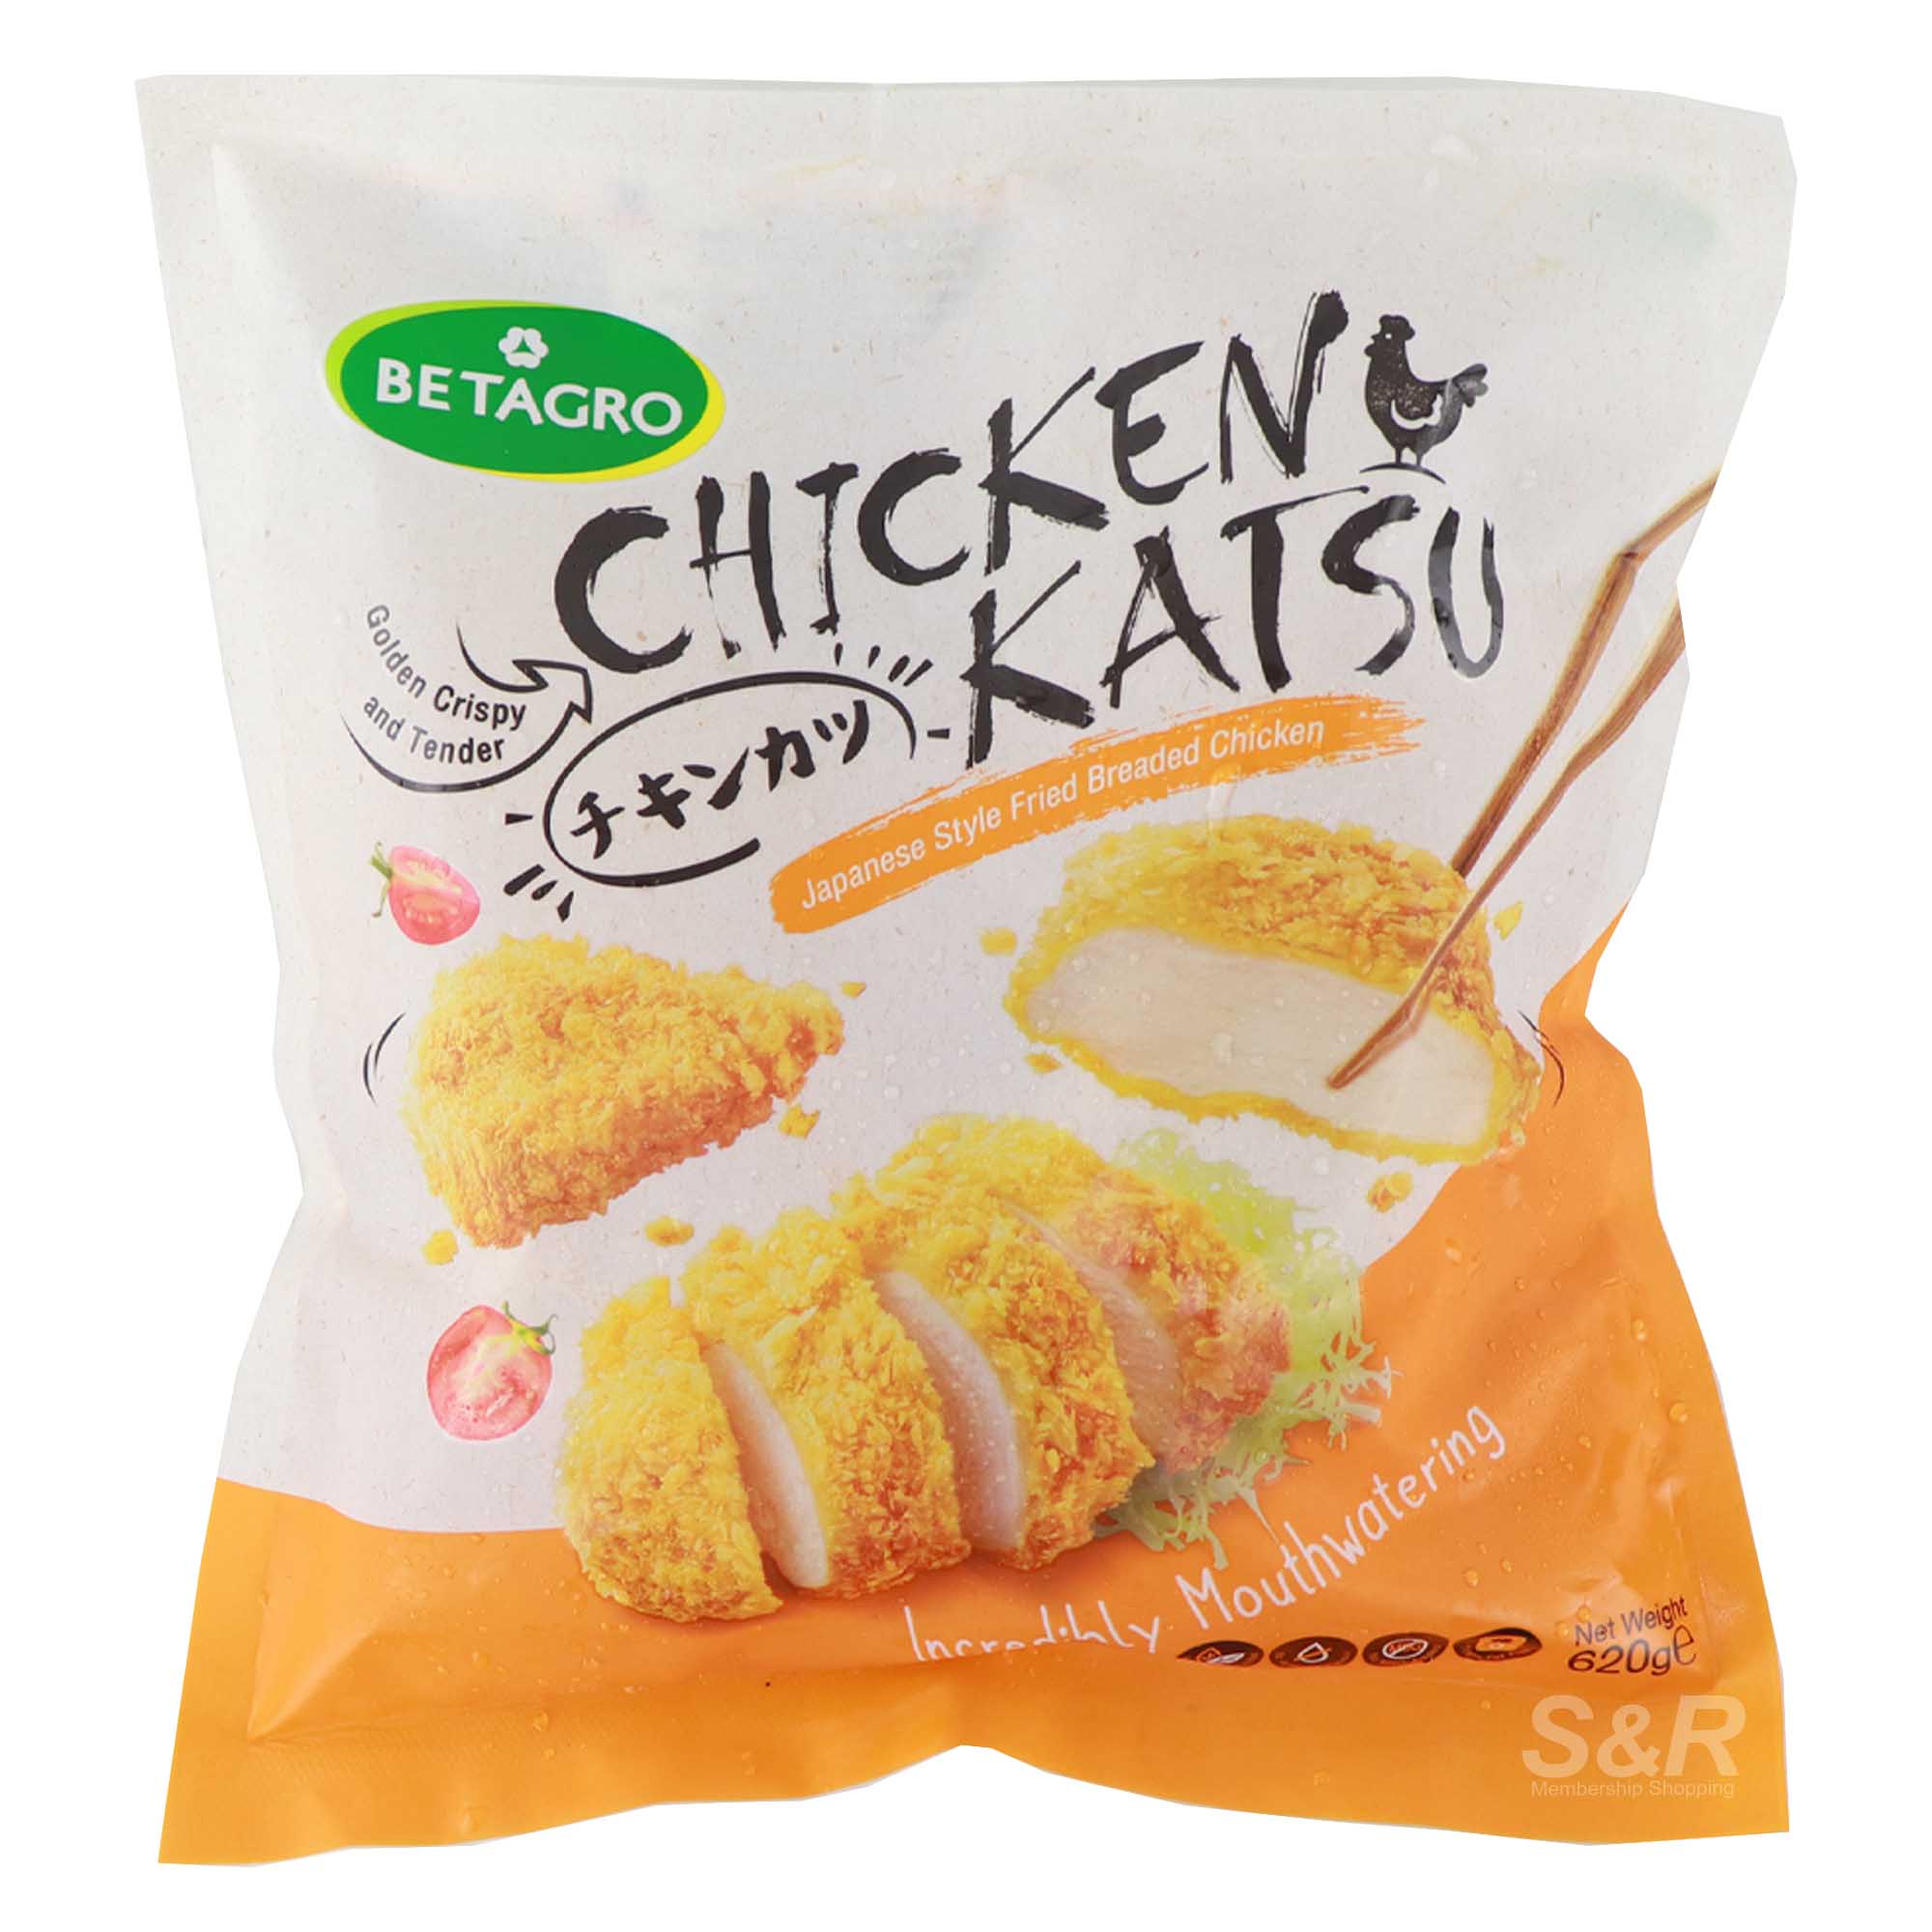 Betagro Chicken Katsu Japanese Style Fried Breaded Chicken 620g